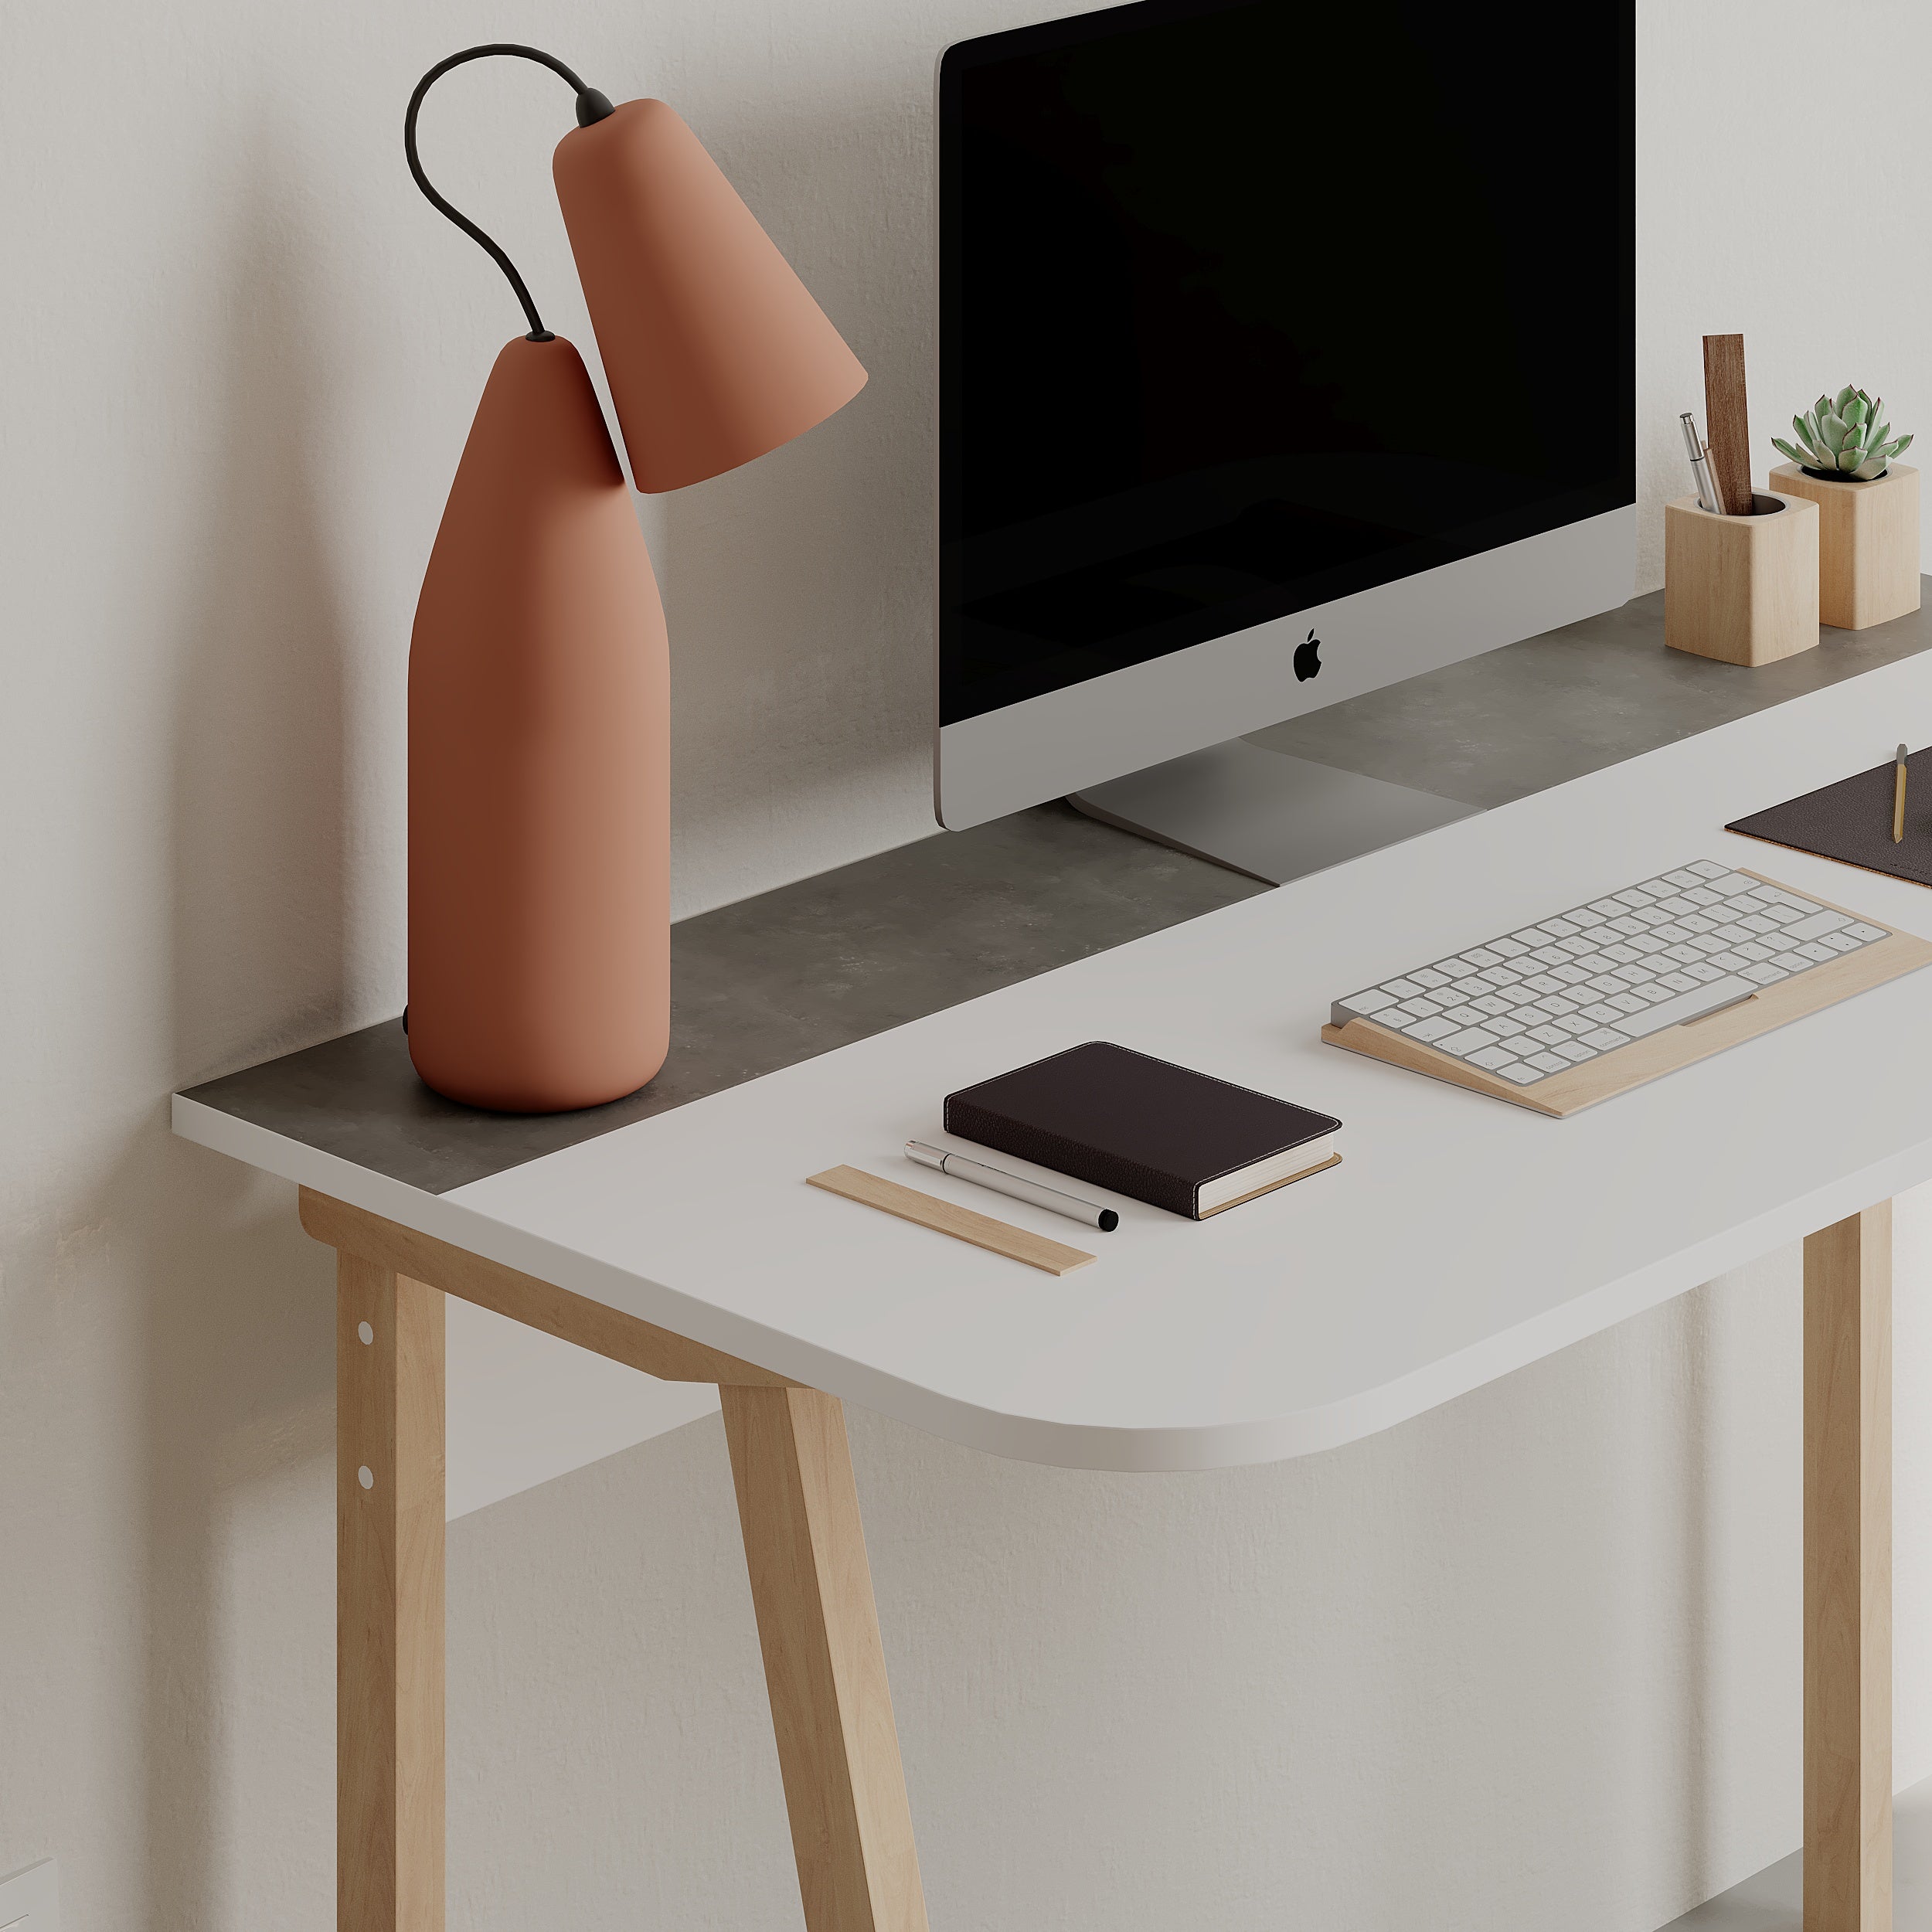 Luton Modern Desk Minimal And Contemporary Width 120cm - Decortie